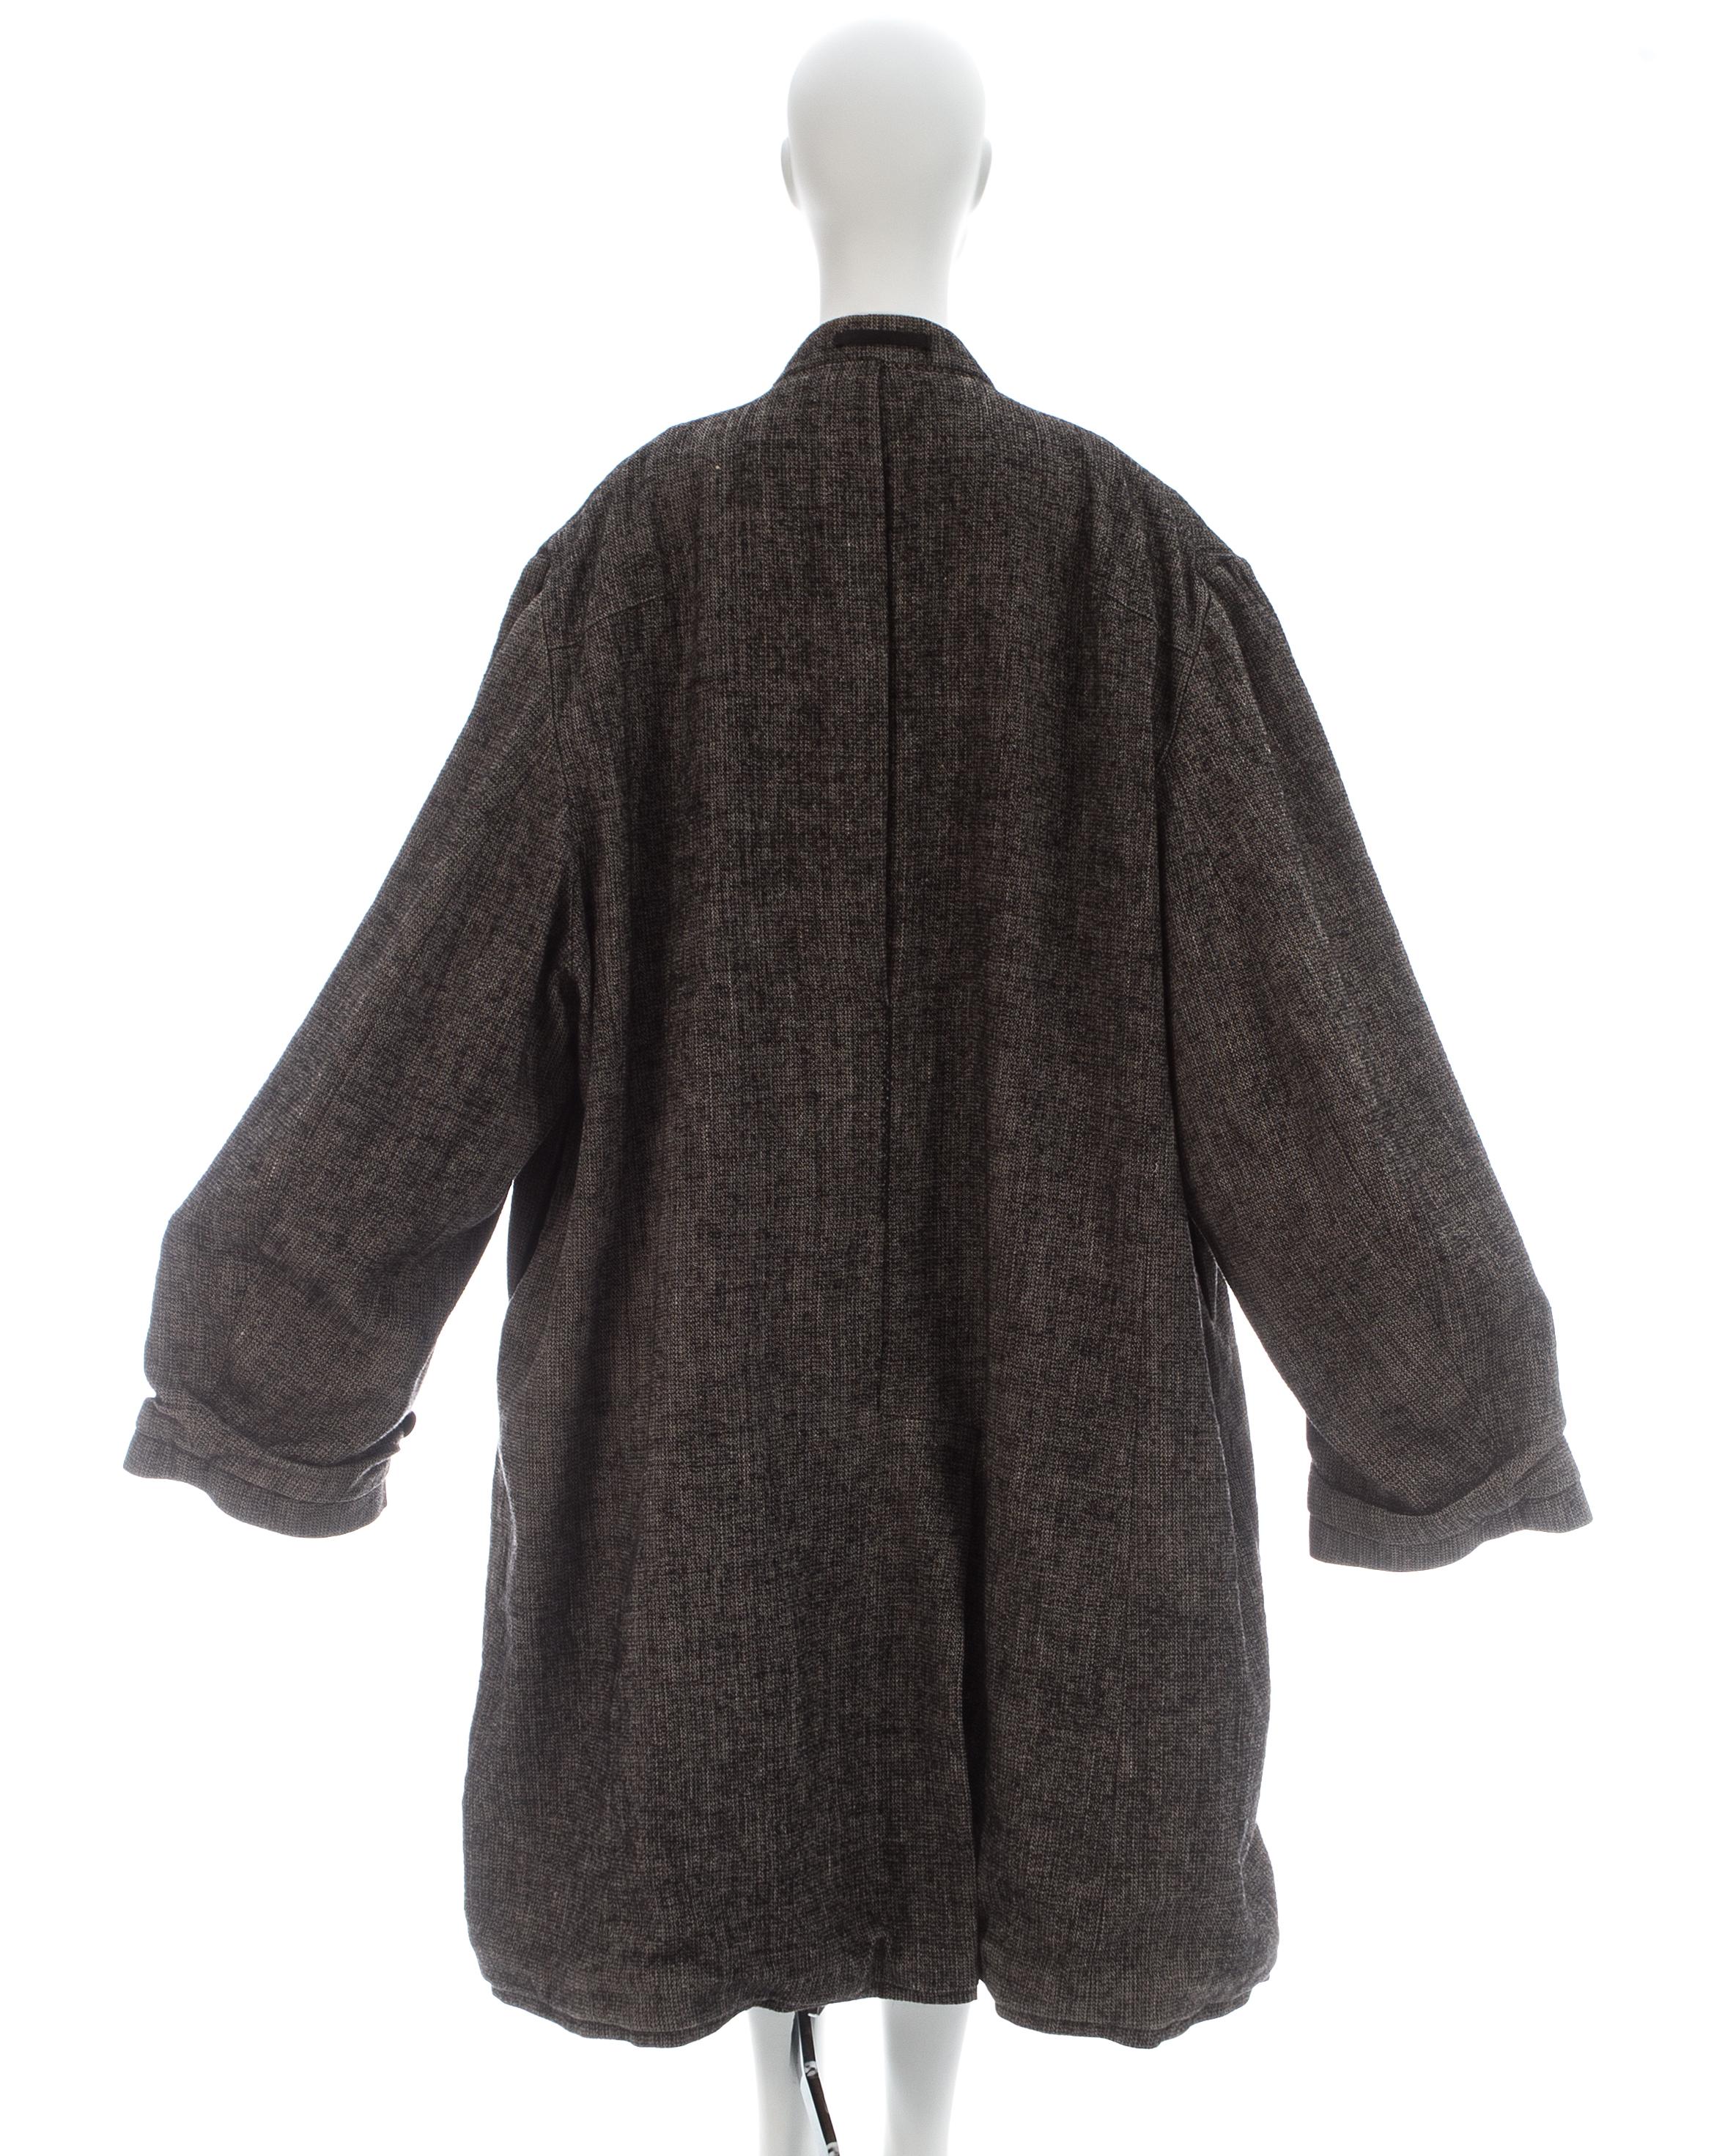 Martin Margiela grey wool and linen XXL size 78 double inside coat, fw 2000 For Sale 7